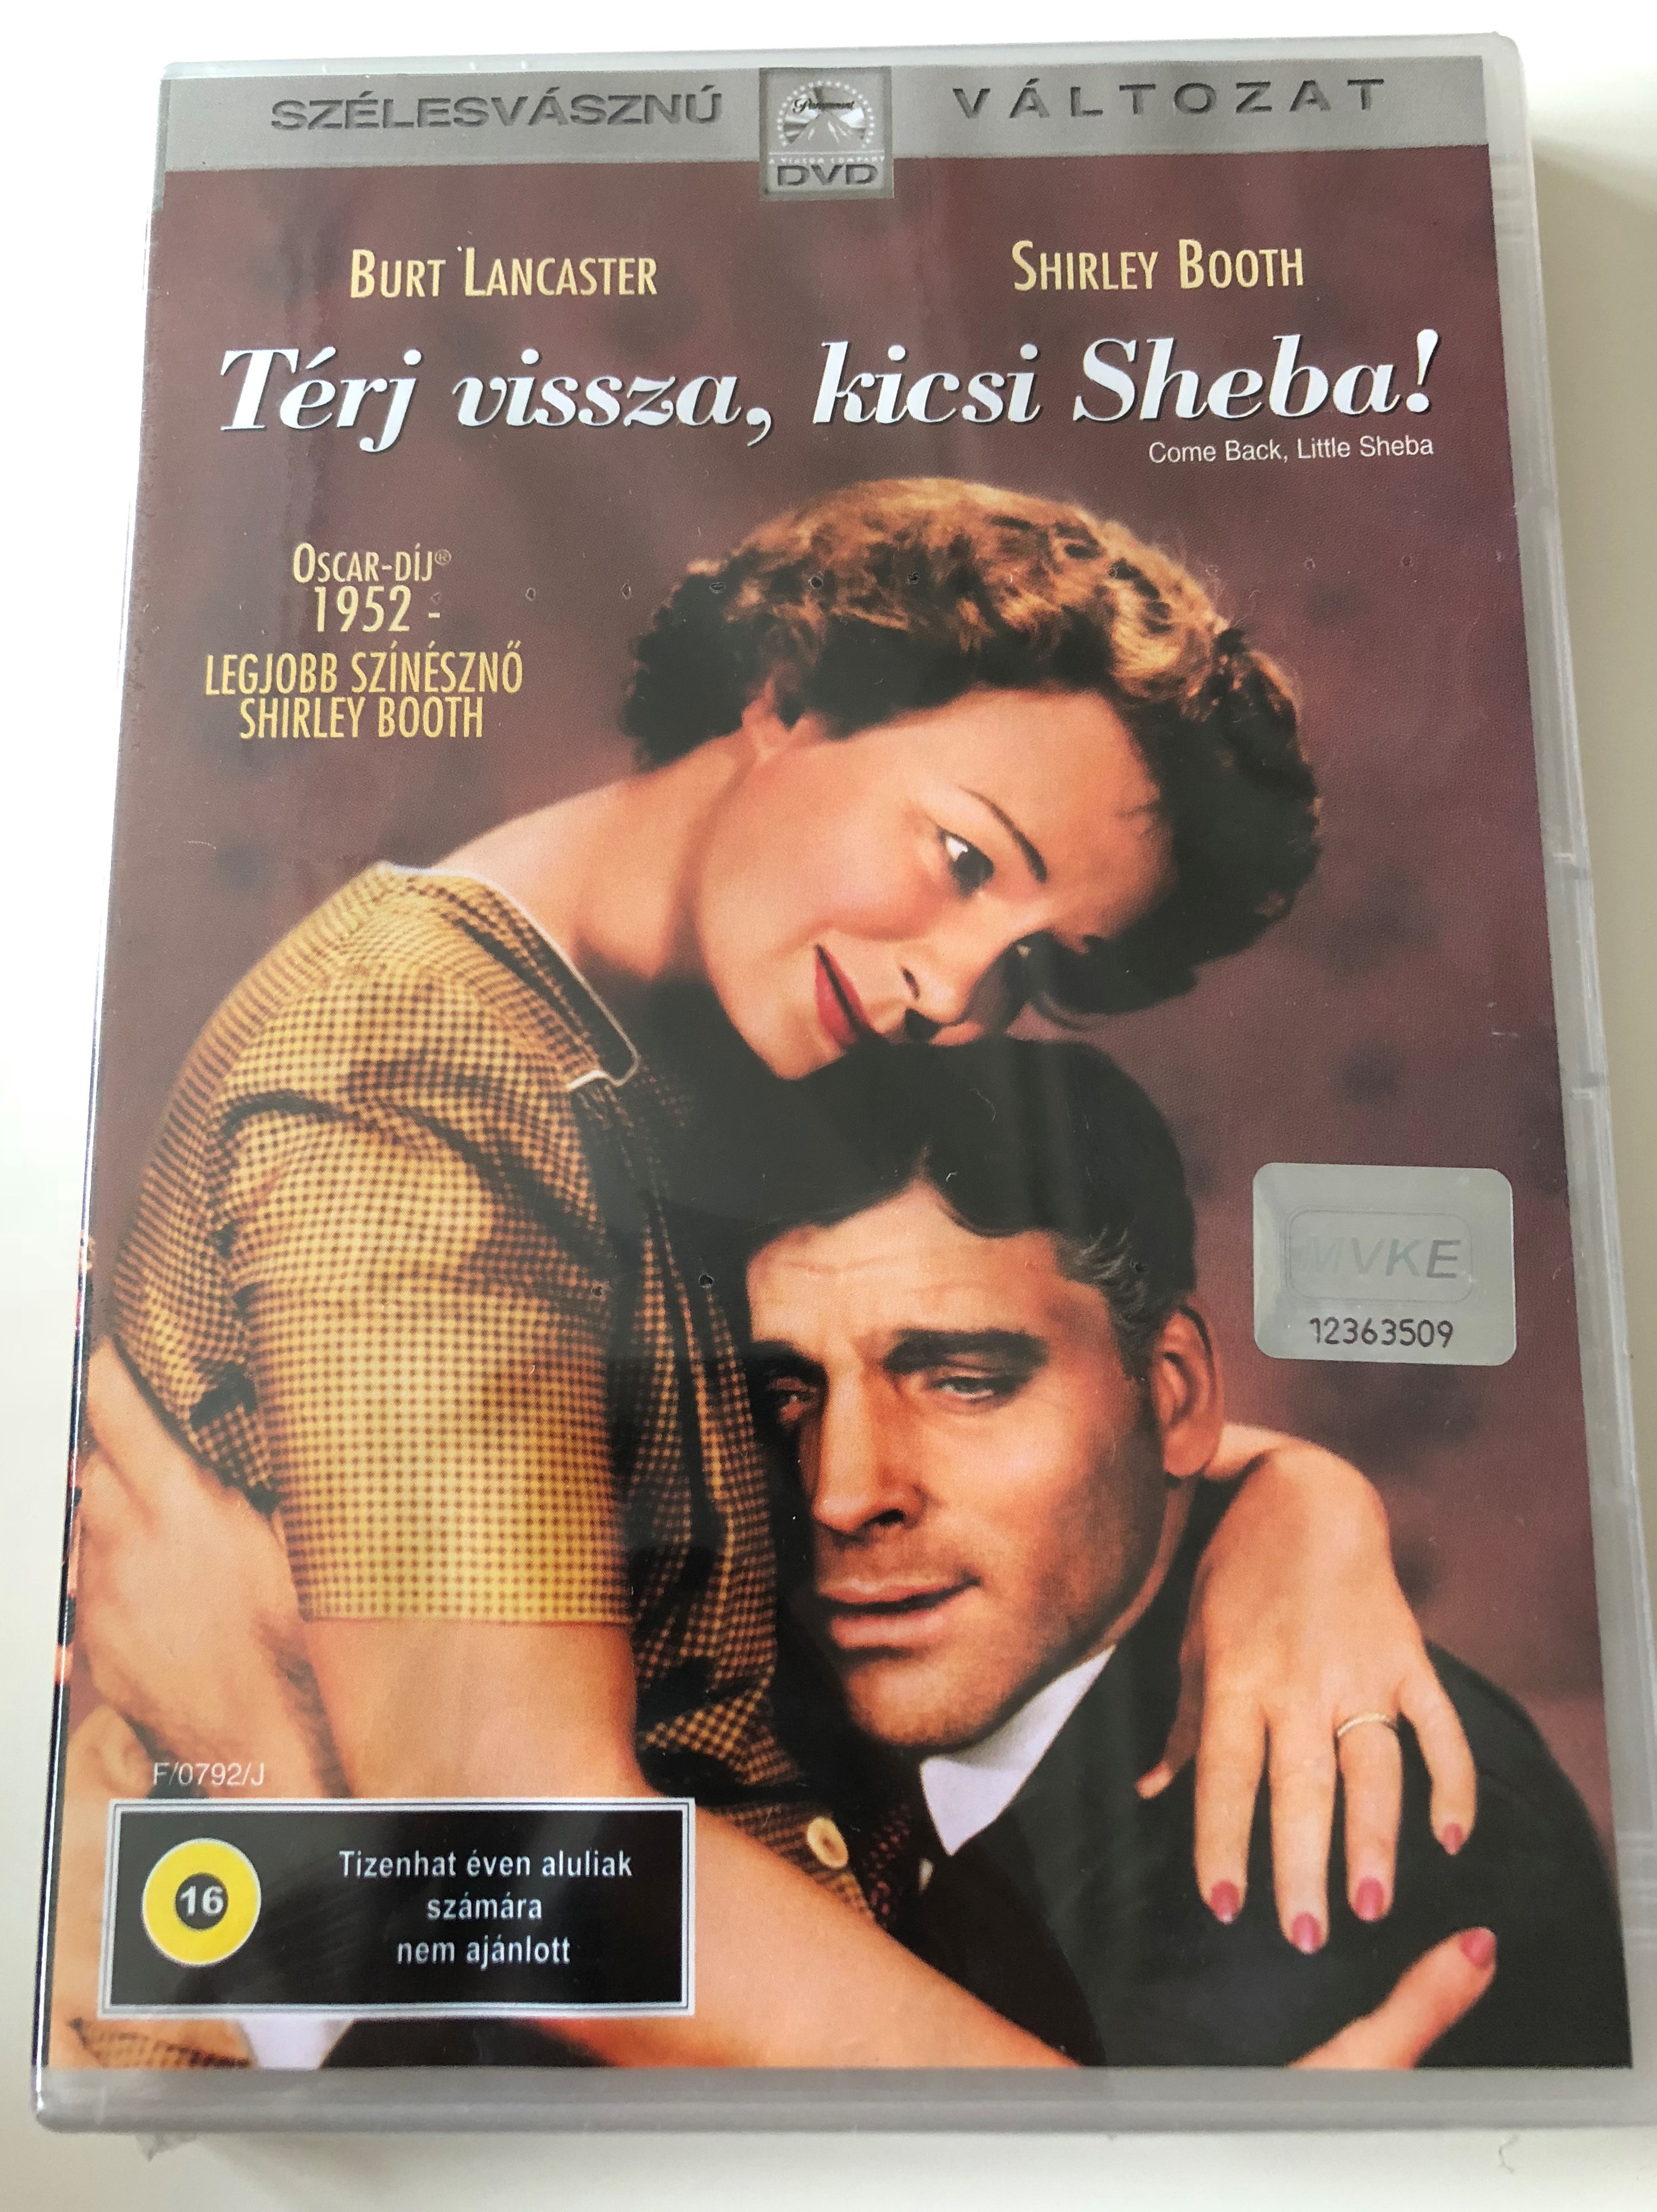 come-back-little-sheba-dvd-1952-t-rj-vissza-kicsi-sheba-directed-by-daniel-mann-starring-burt-lancaster-shirley-booth-1952-oscar-winner-1-.jpg